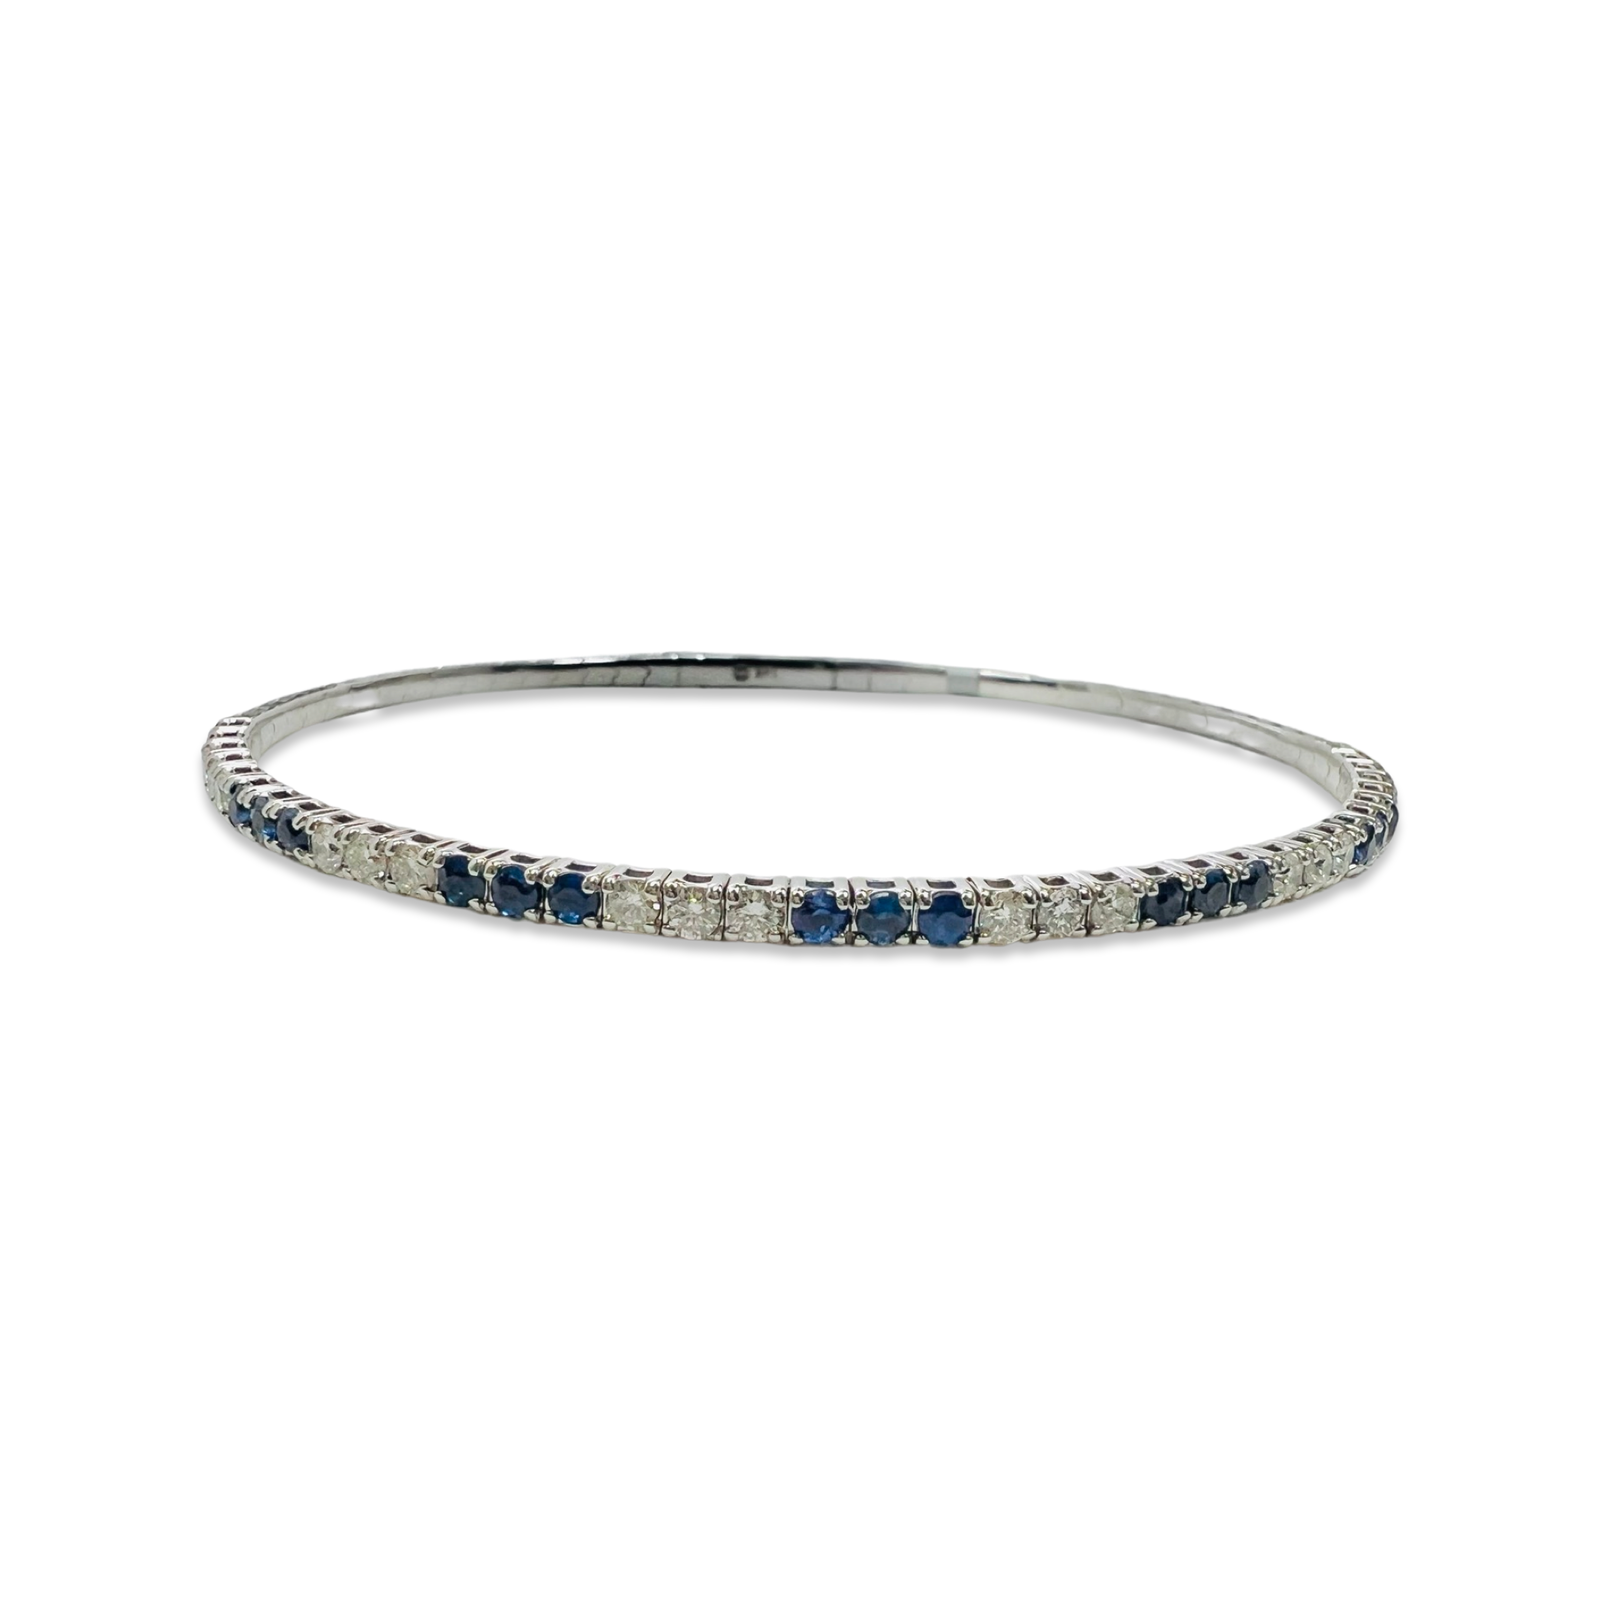 Shop trendy silver bracelet for women online at low price